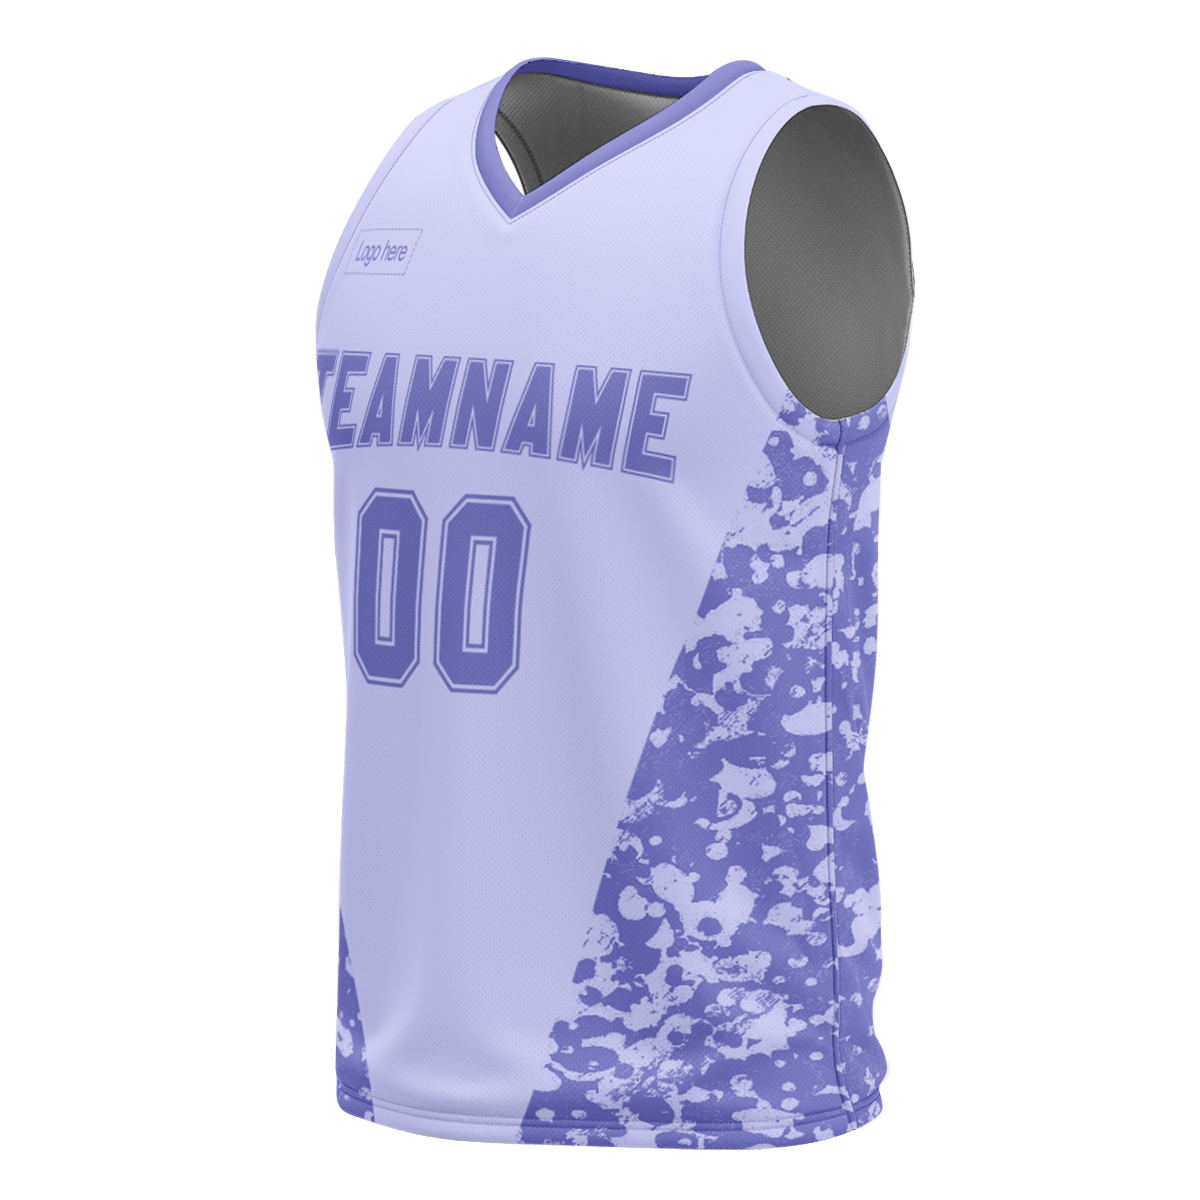 custom-cool-design-basketball-shirts-unisex-sublimation-print-on-demand-basketball-uniforms-at-cj-pod-5